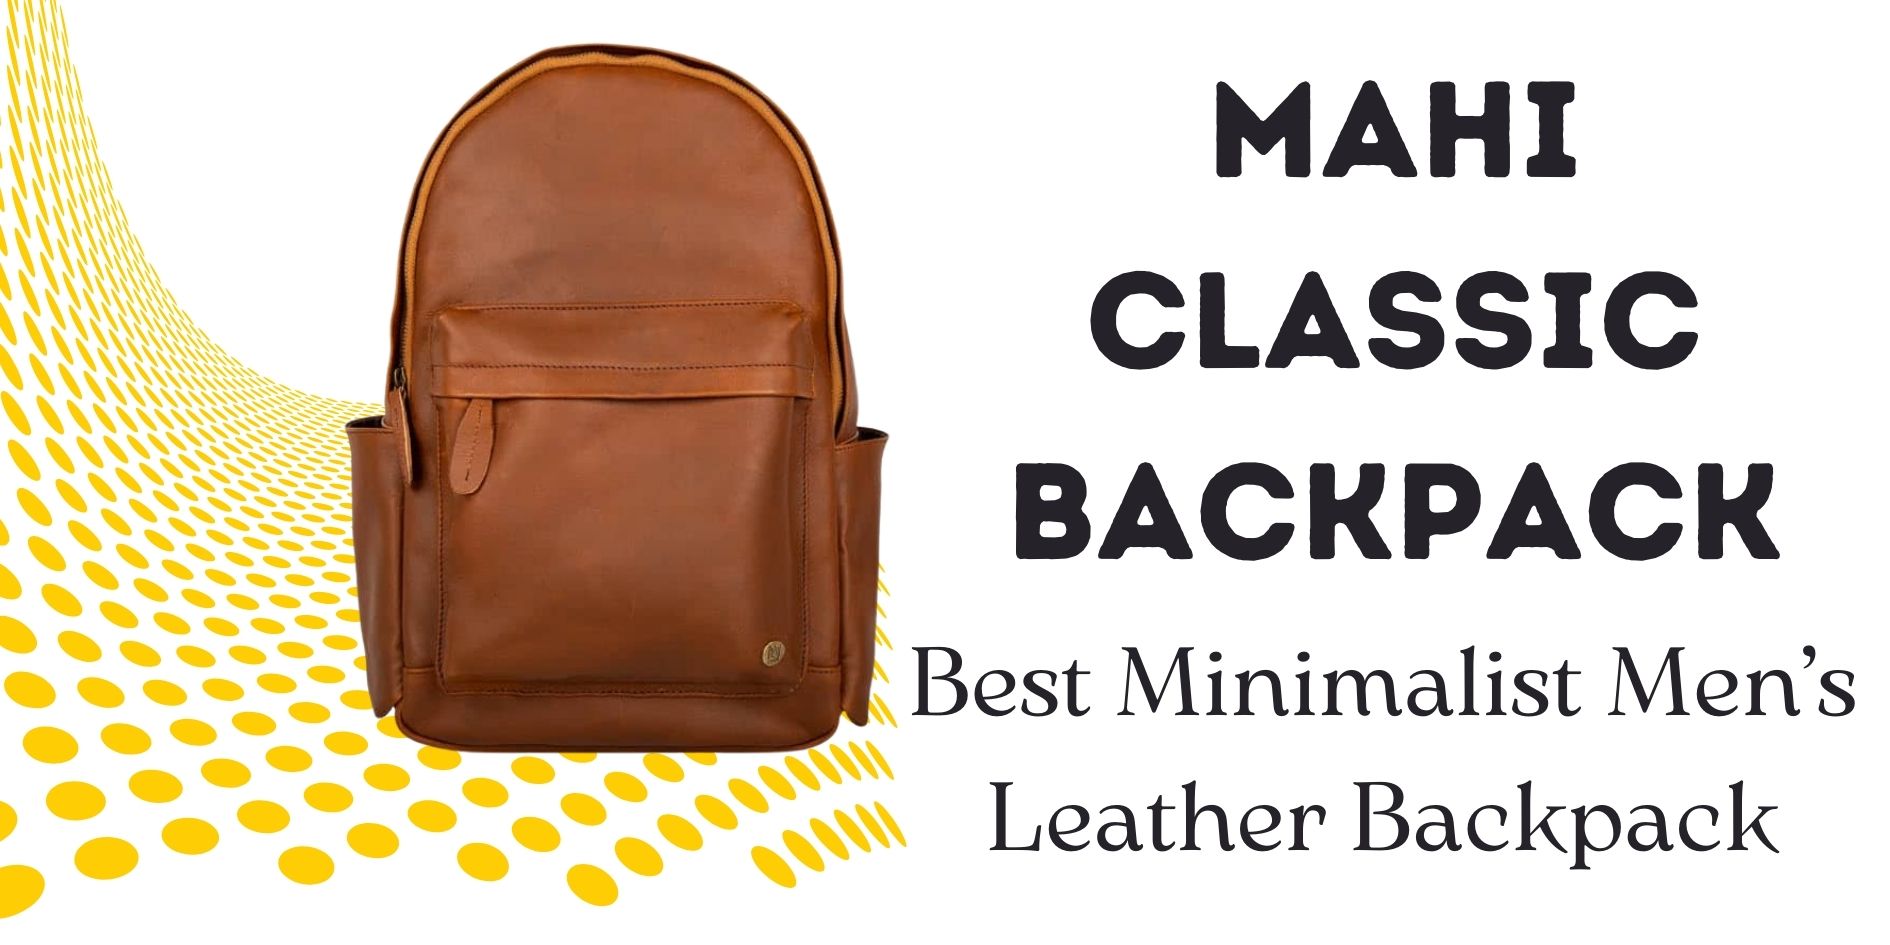 Best Minimalist Men’s Leather Backpack